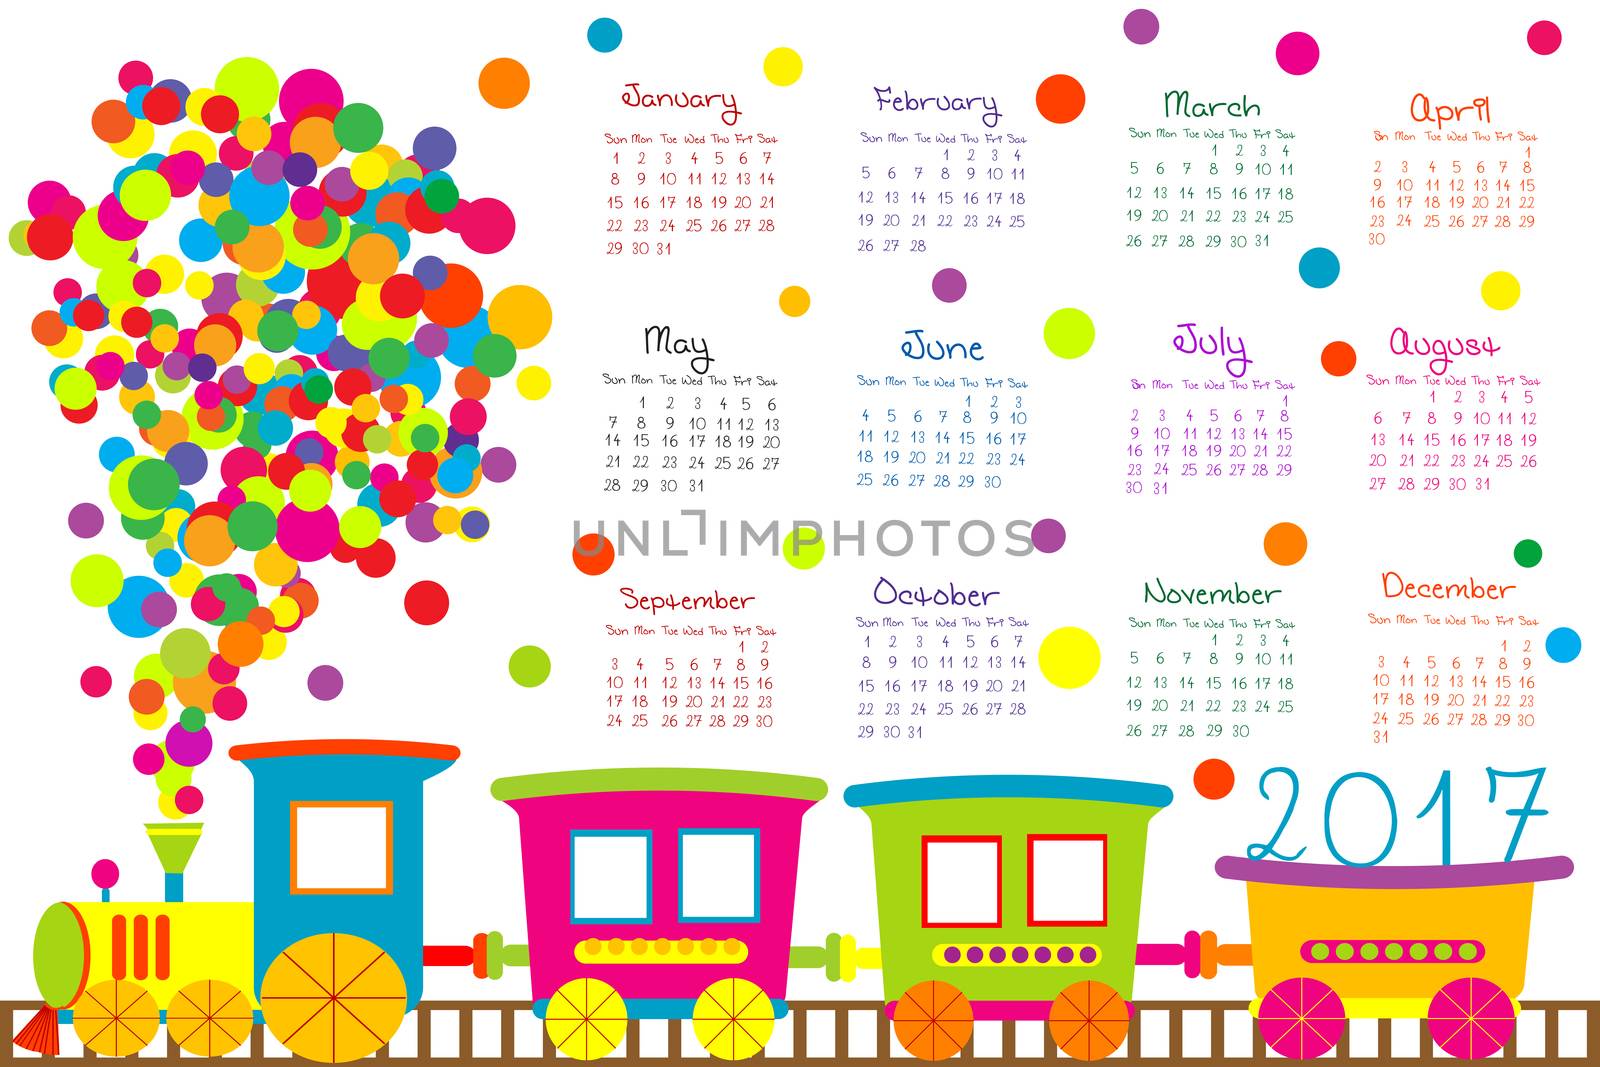 2017 calendar with cartoon train for kids by hibrida13